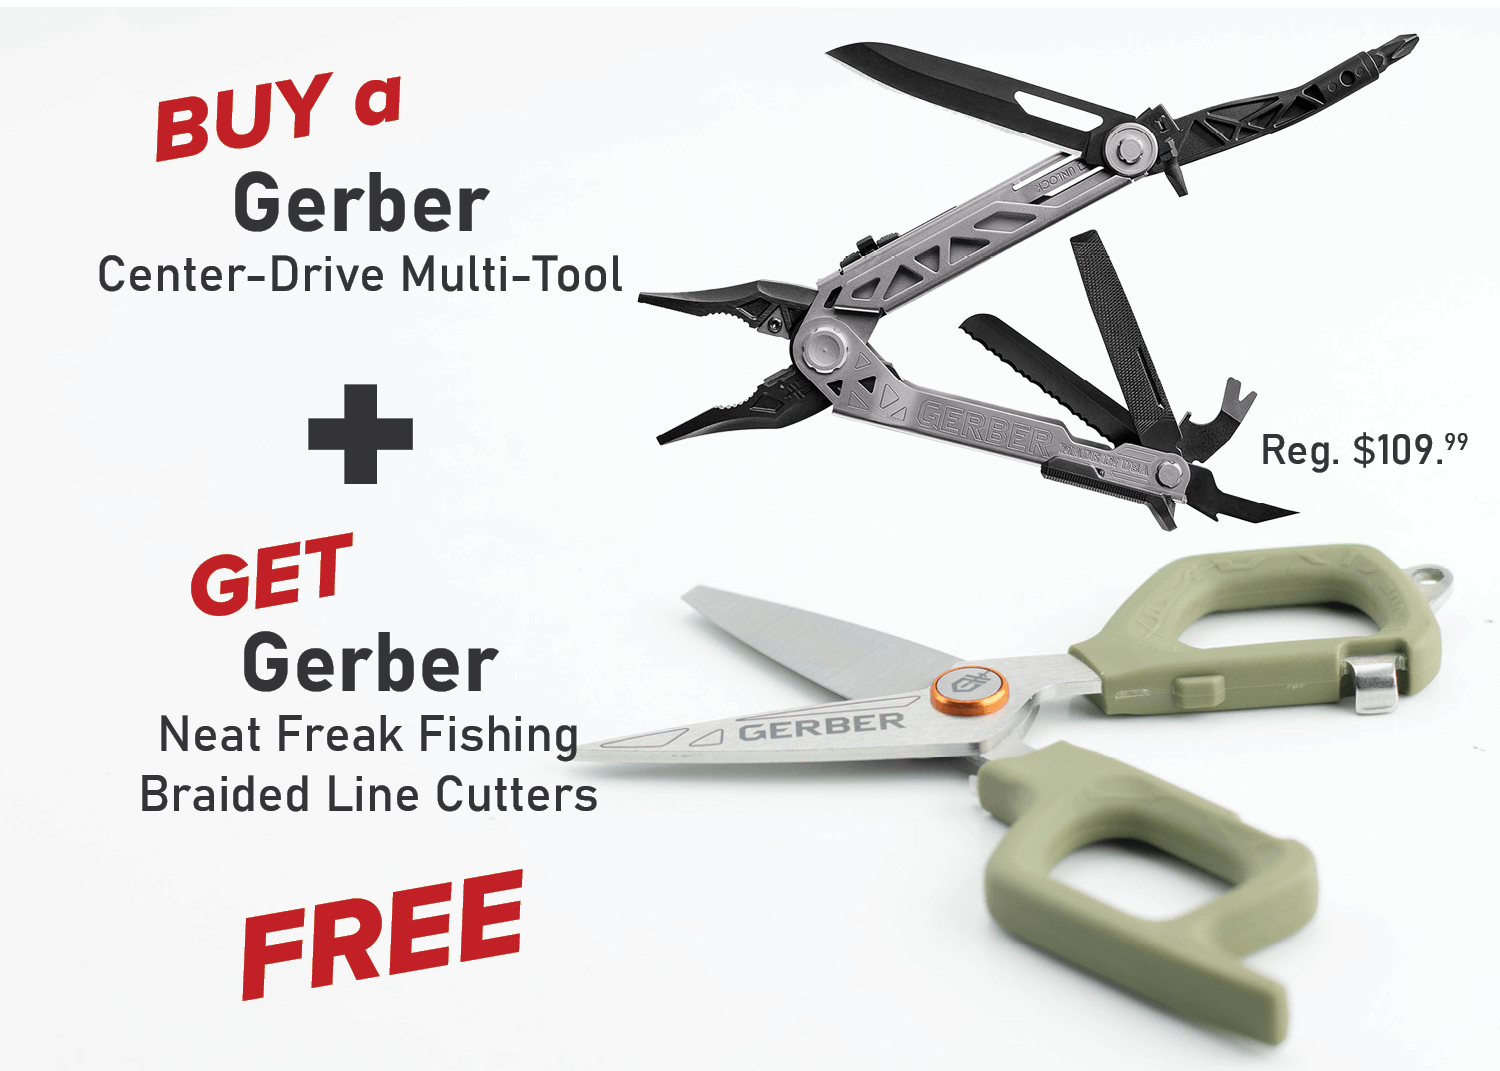 Buy a Gerber Center-Drive Multi-Tool & Get Gerber Neat Freak Fishing Braided Line Cutters